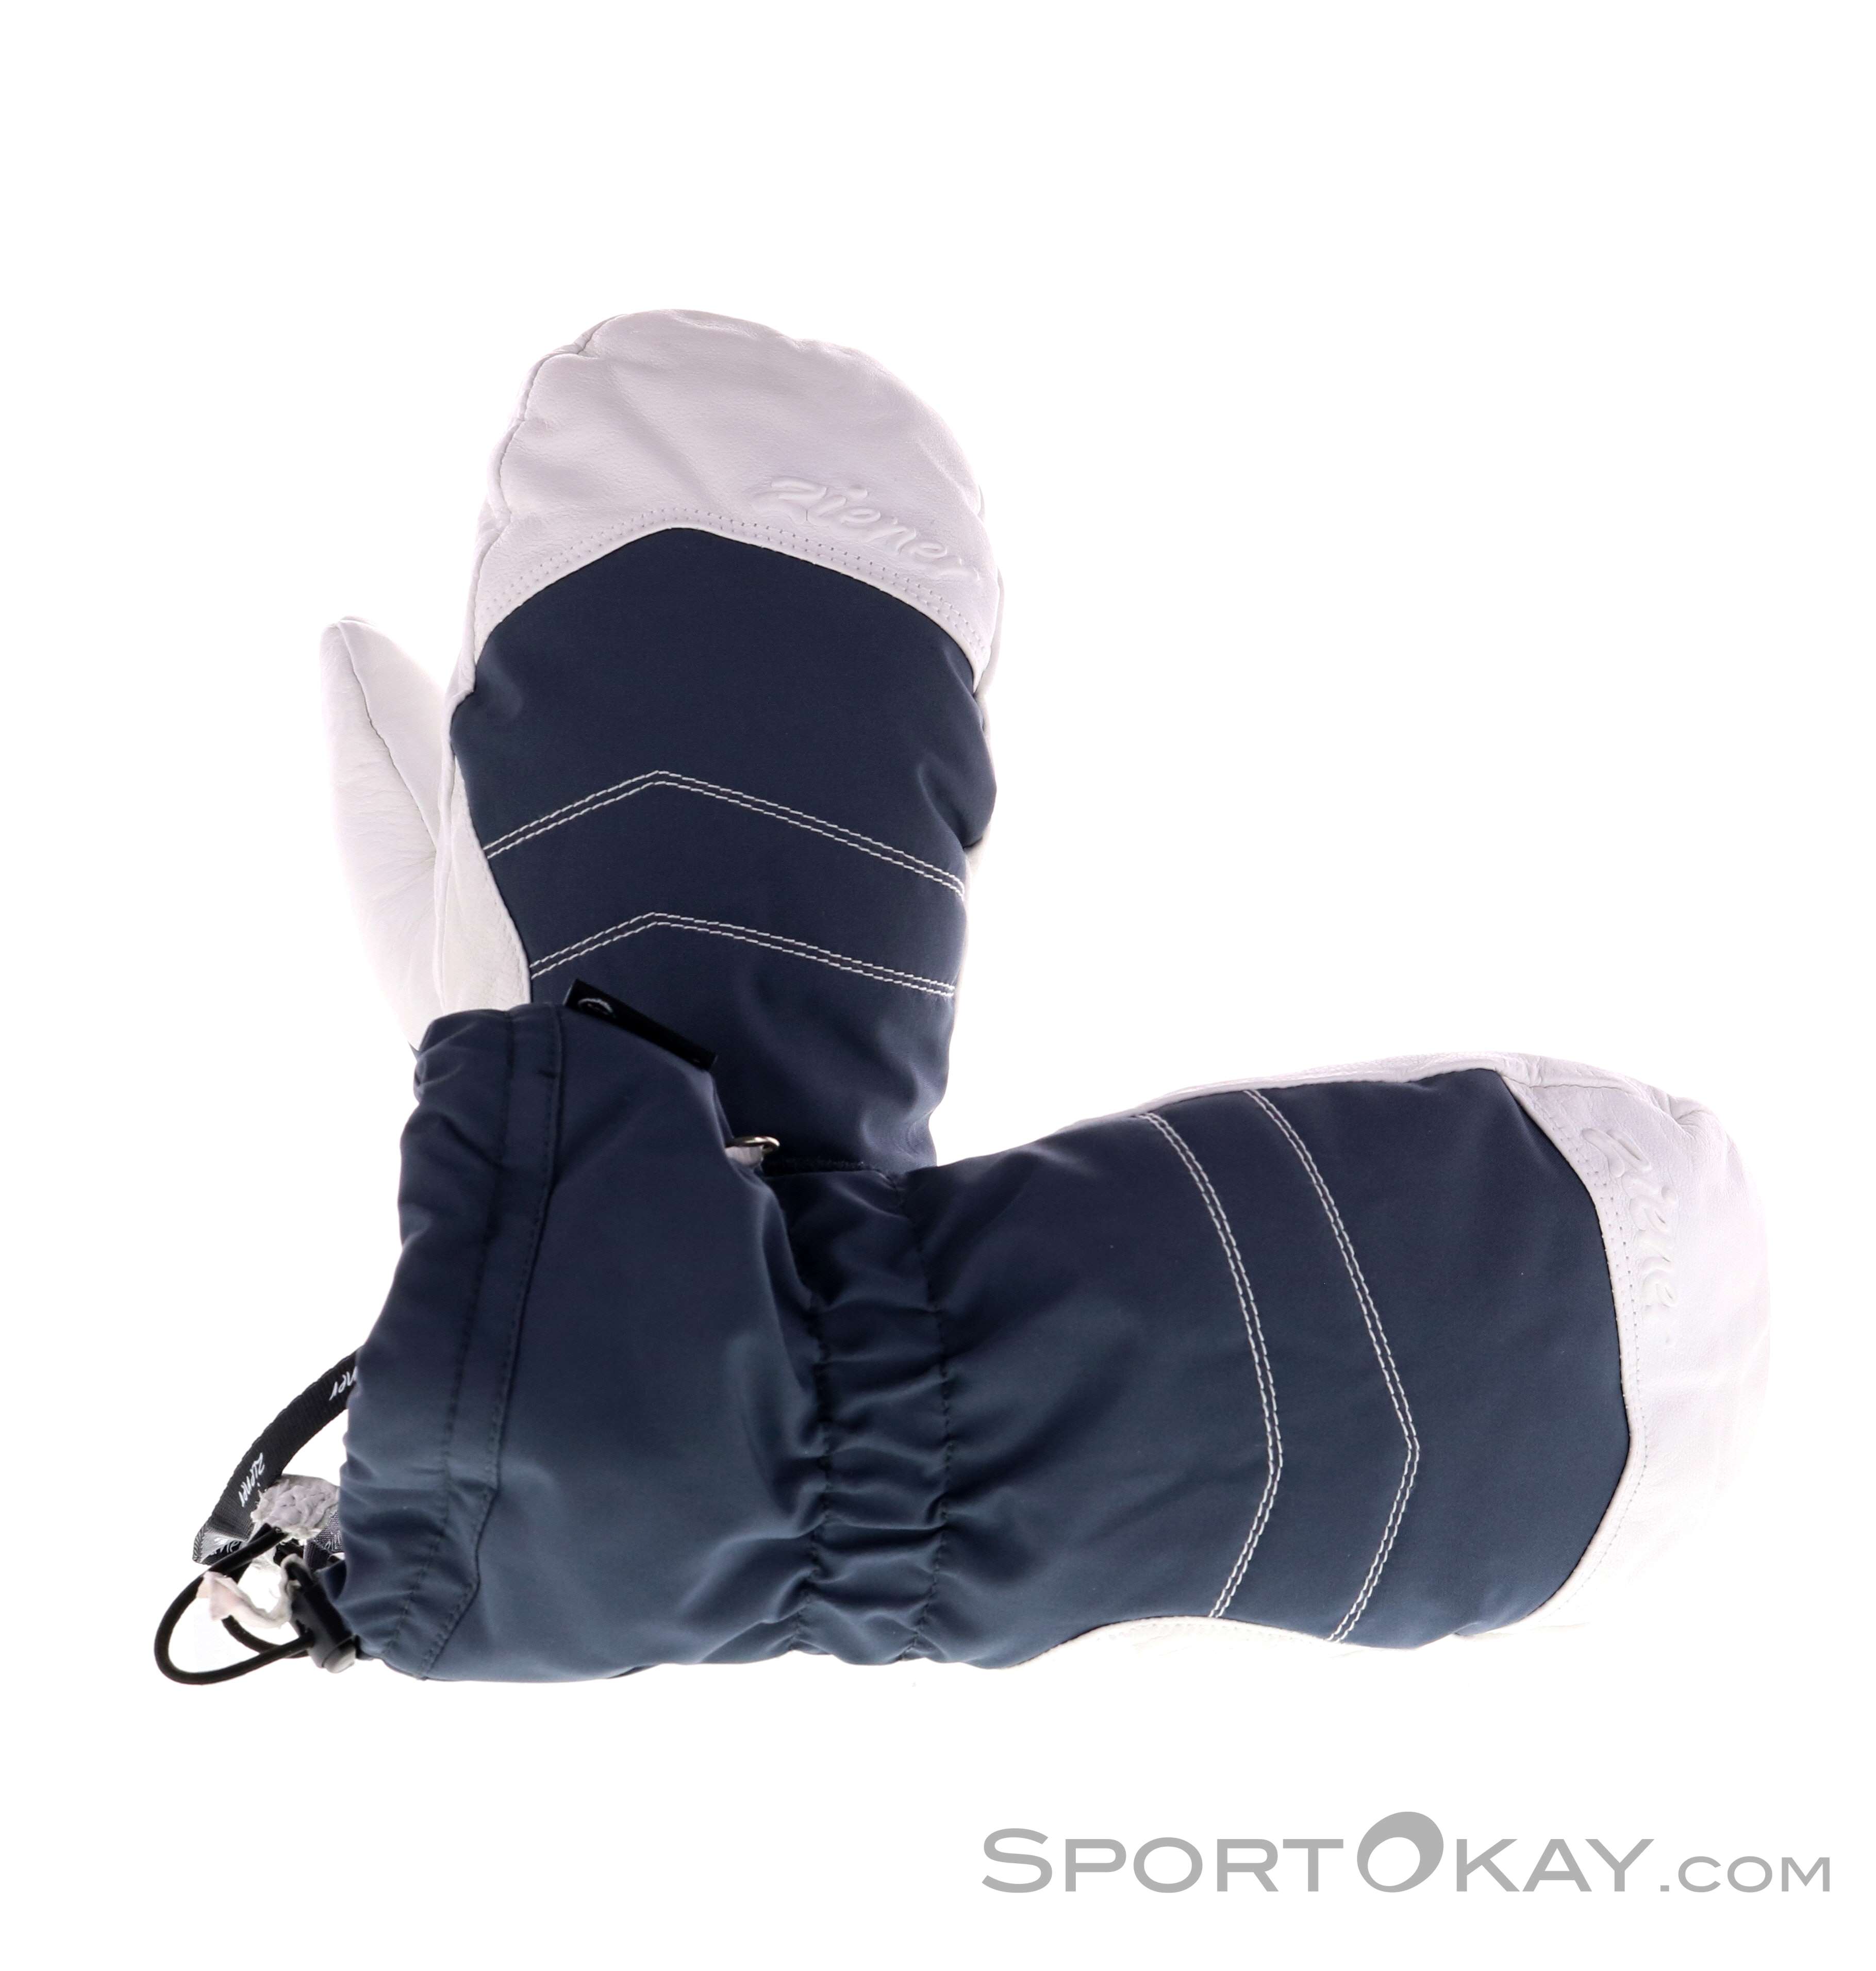 & AS AW Ziener All Kilati - - Ski Ski Women Mitten Gloves Freeride Ski - Gloves Clothing -